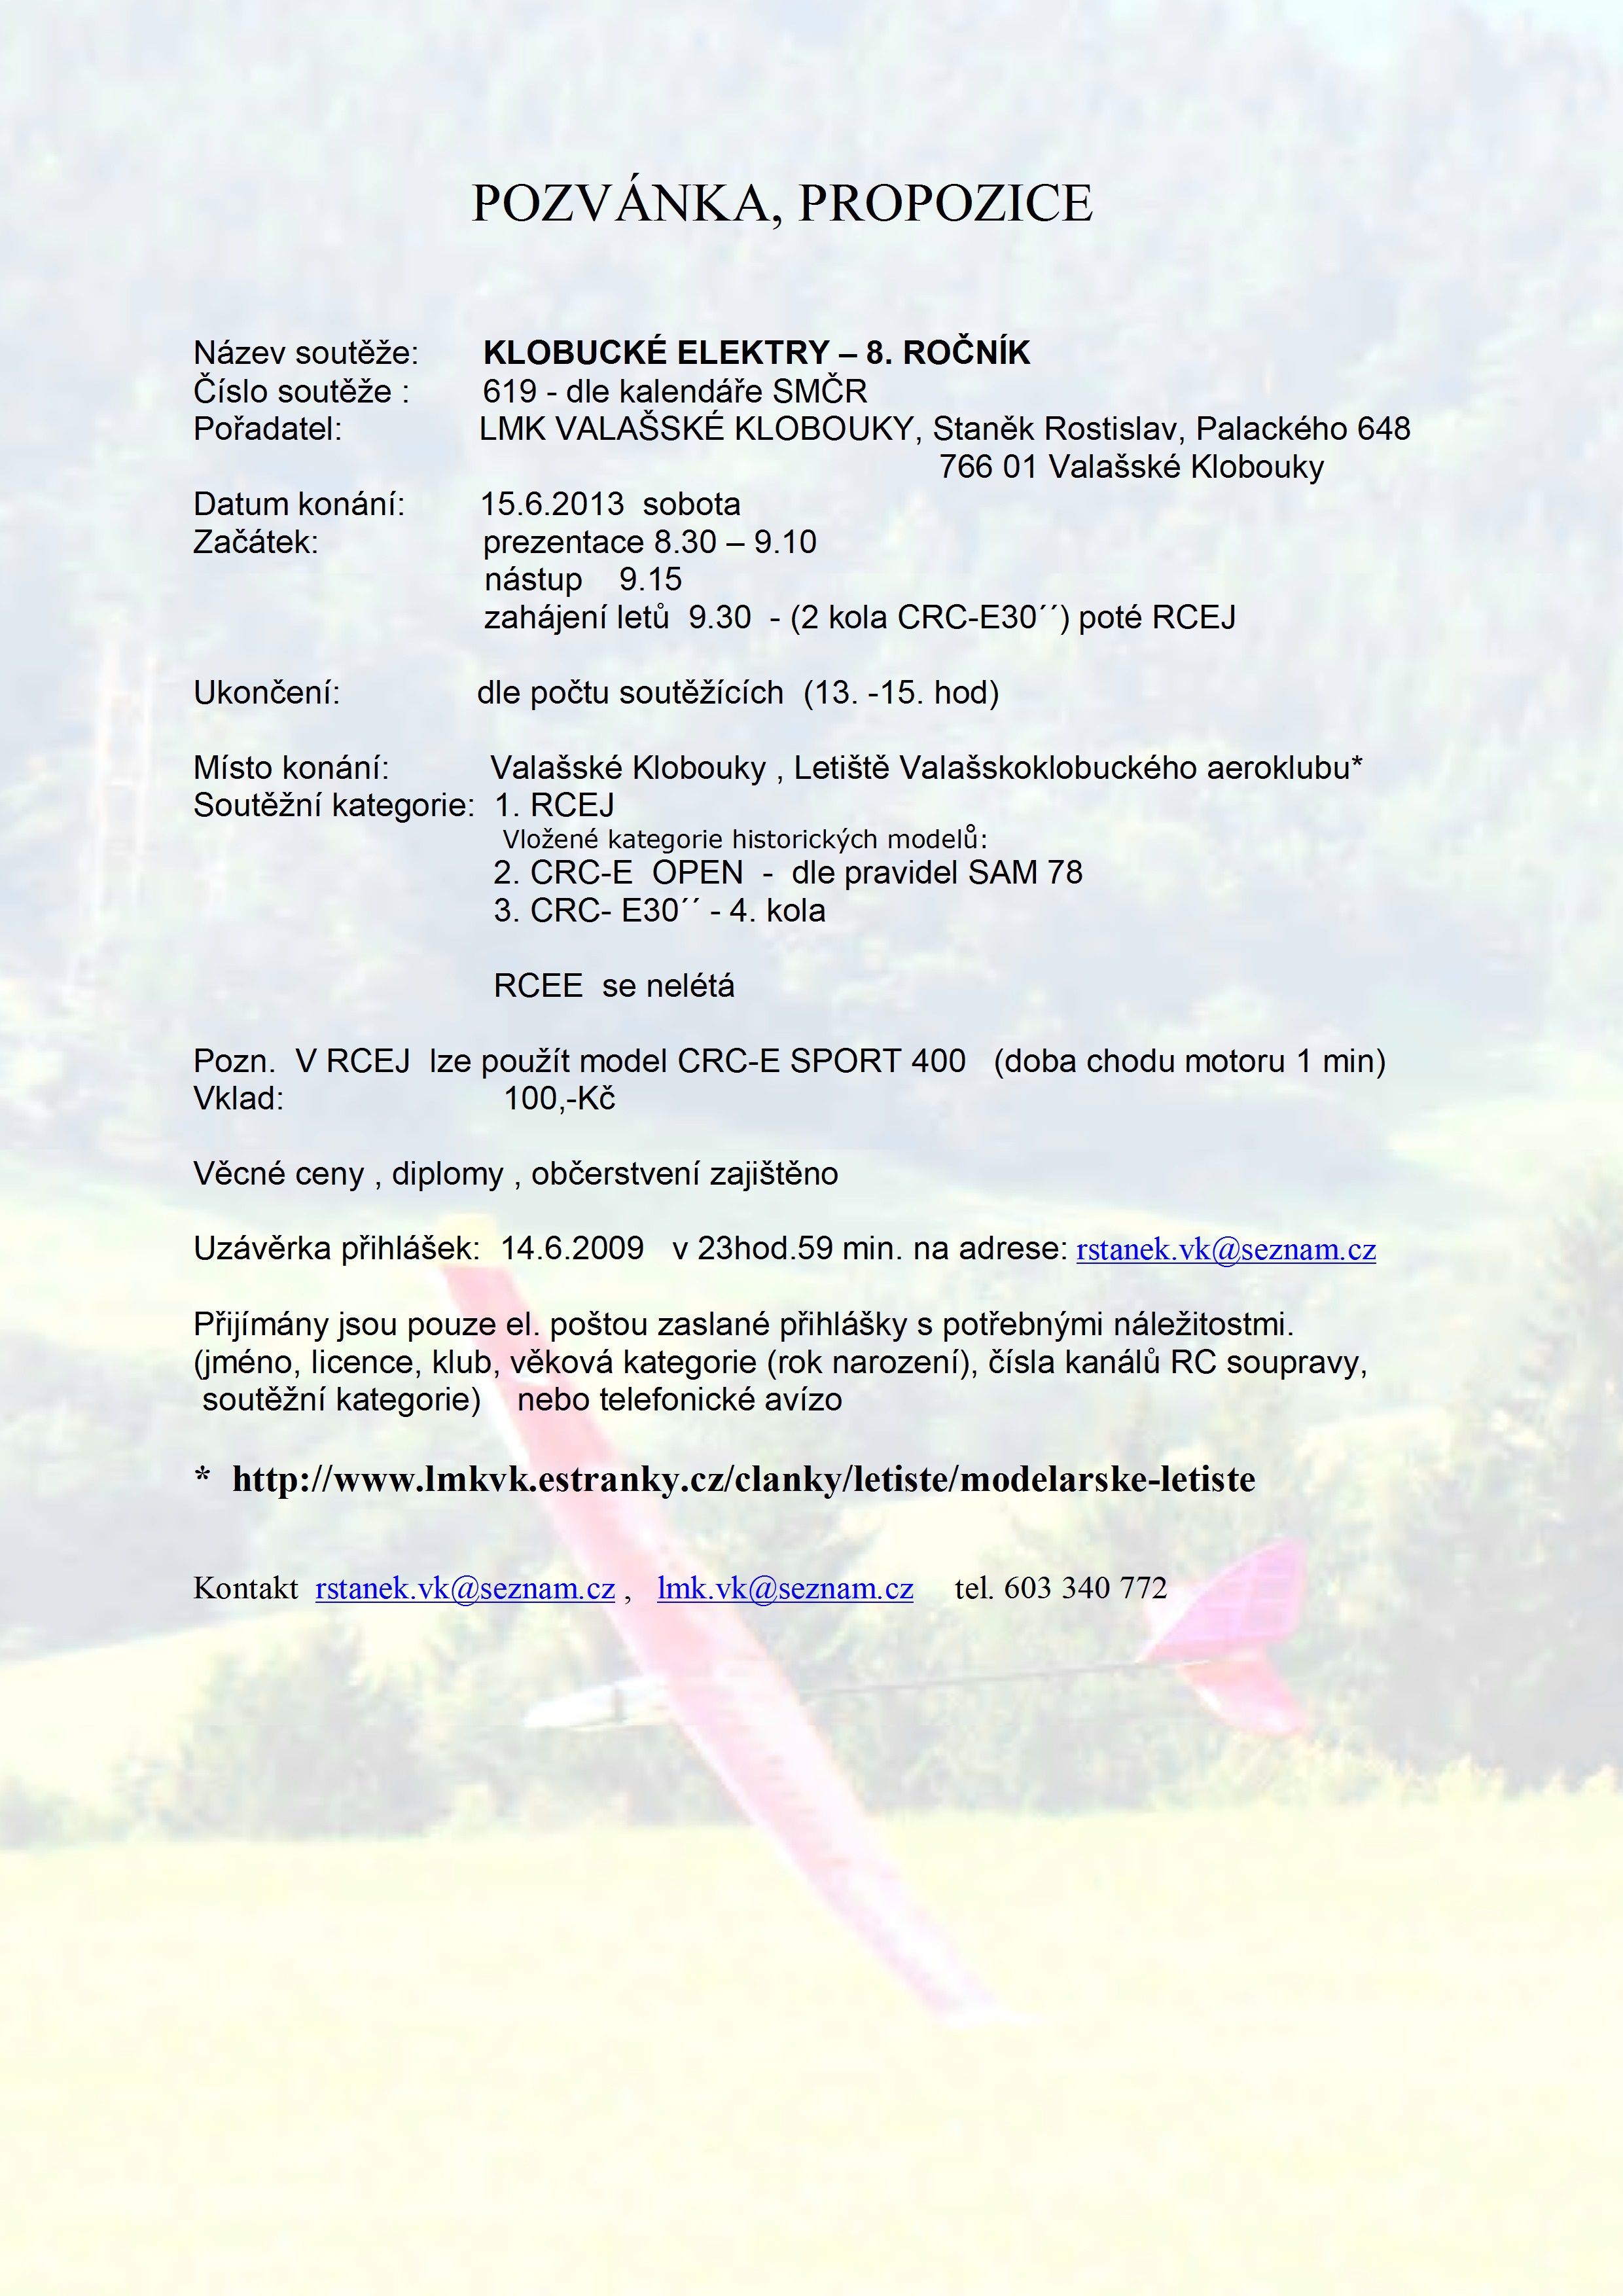 Pozvanka -propozice na soutez RCEJ 2013-bs